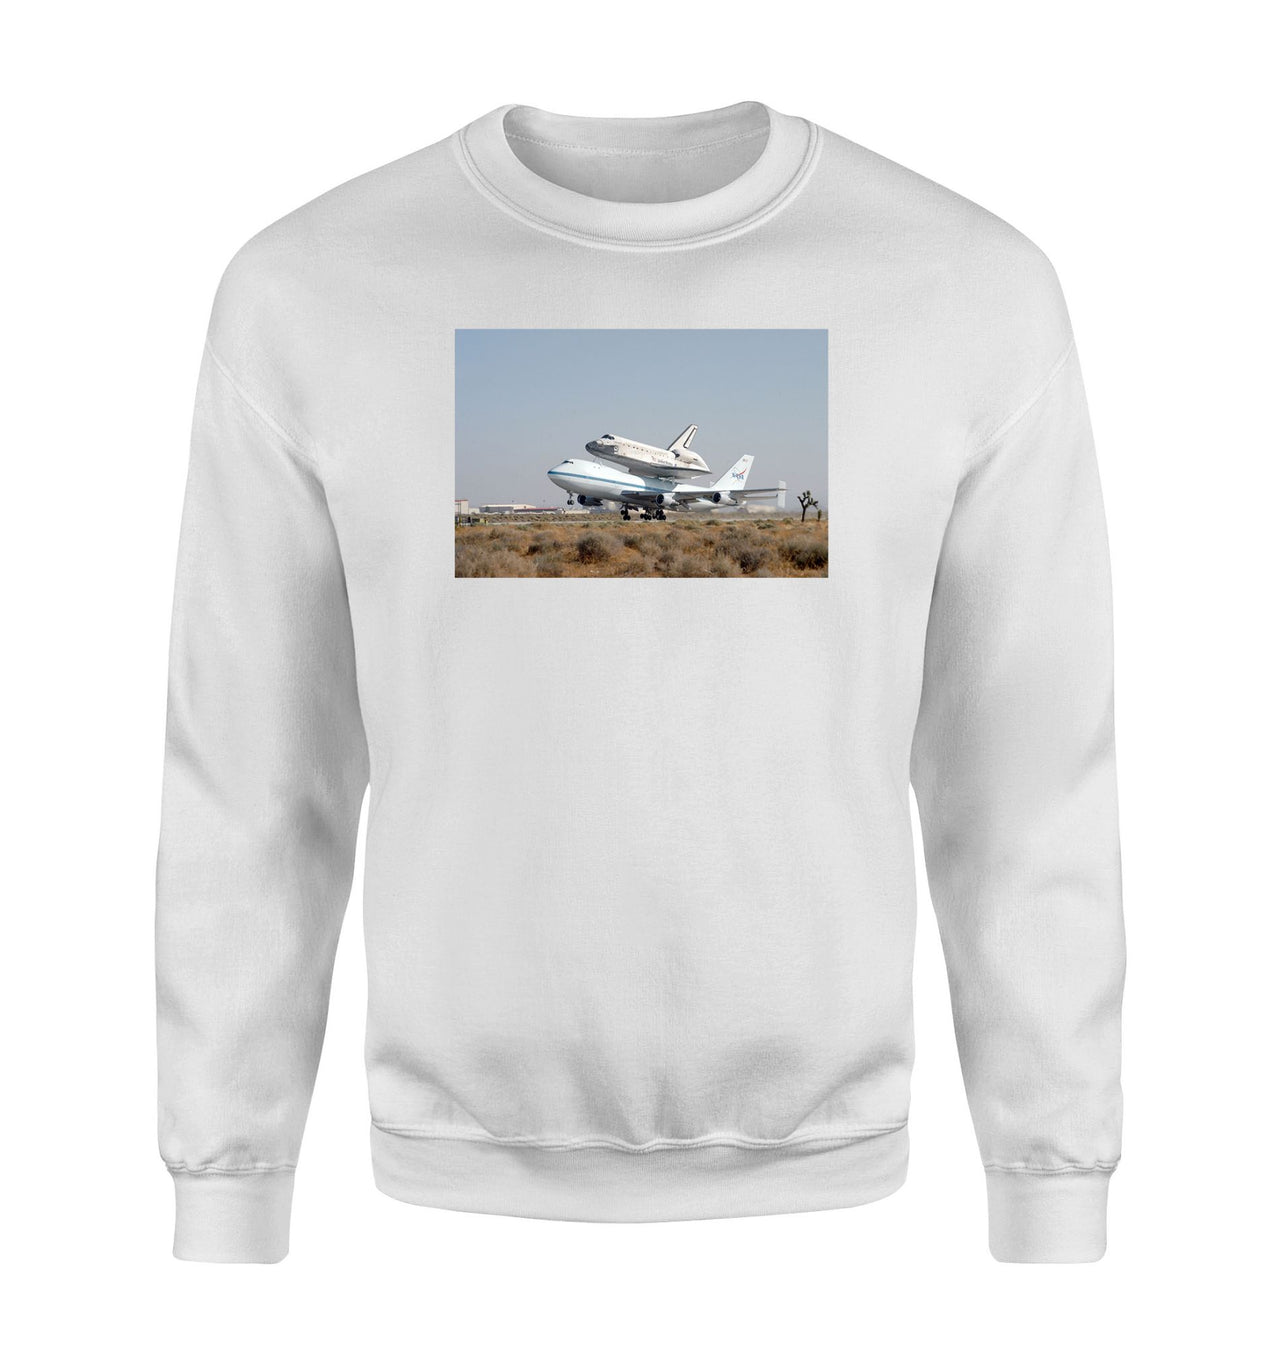 Boeing 747 Carrying Nasa's Space Shuttle Designed Sweatshirts